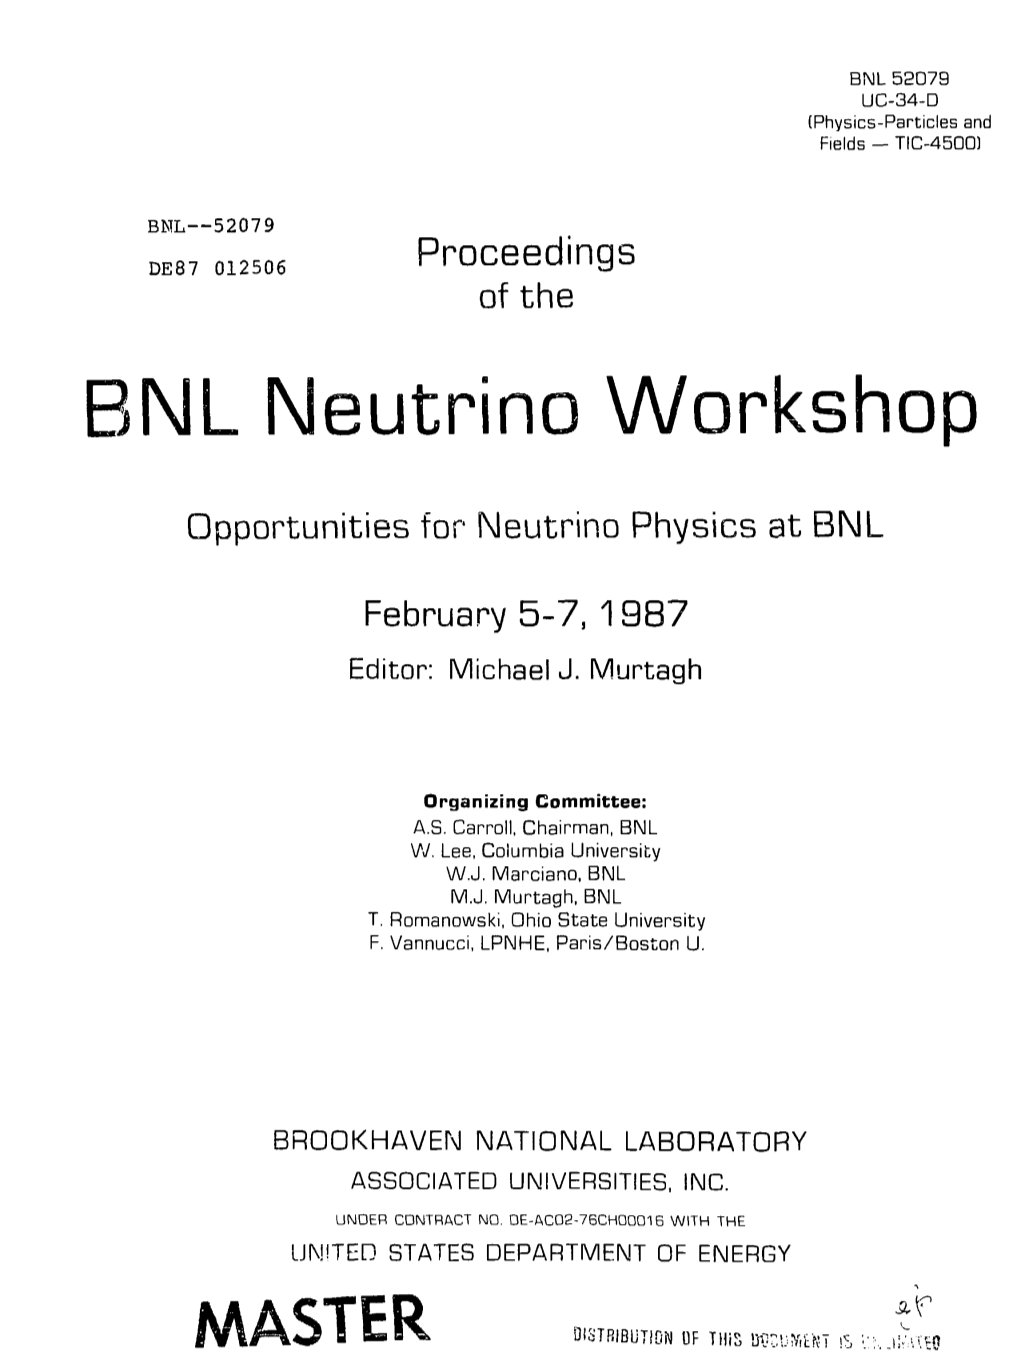 NL Neutrino Workshop